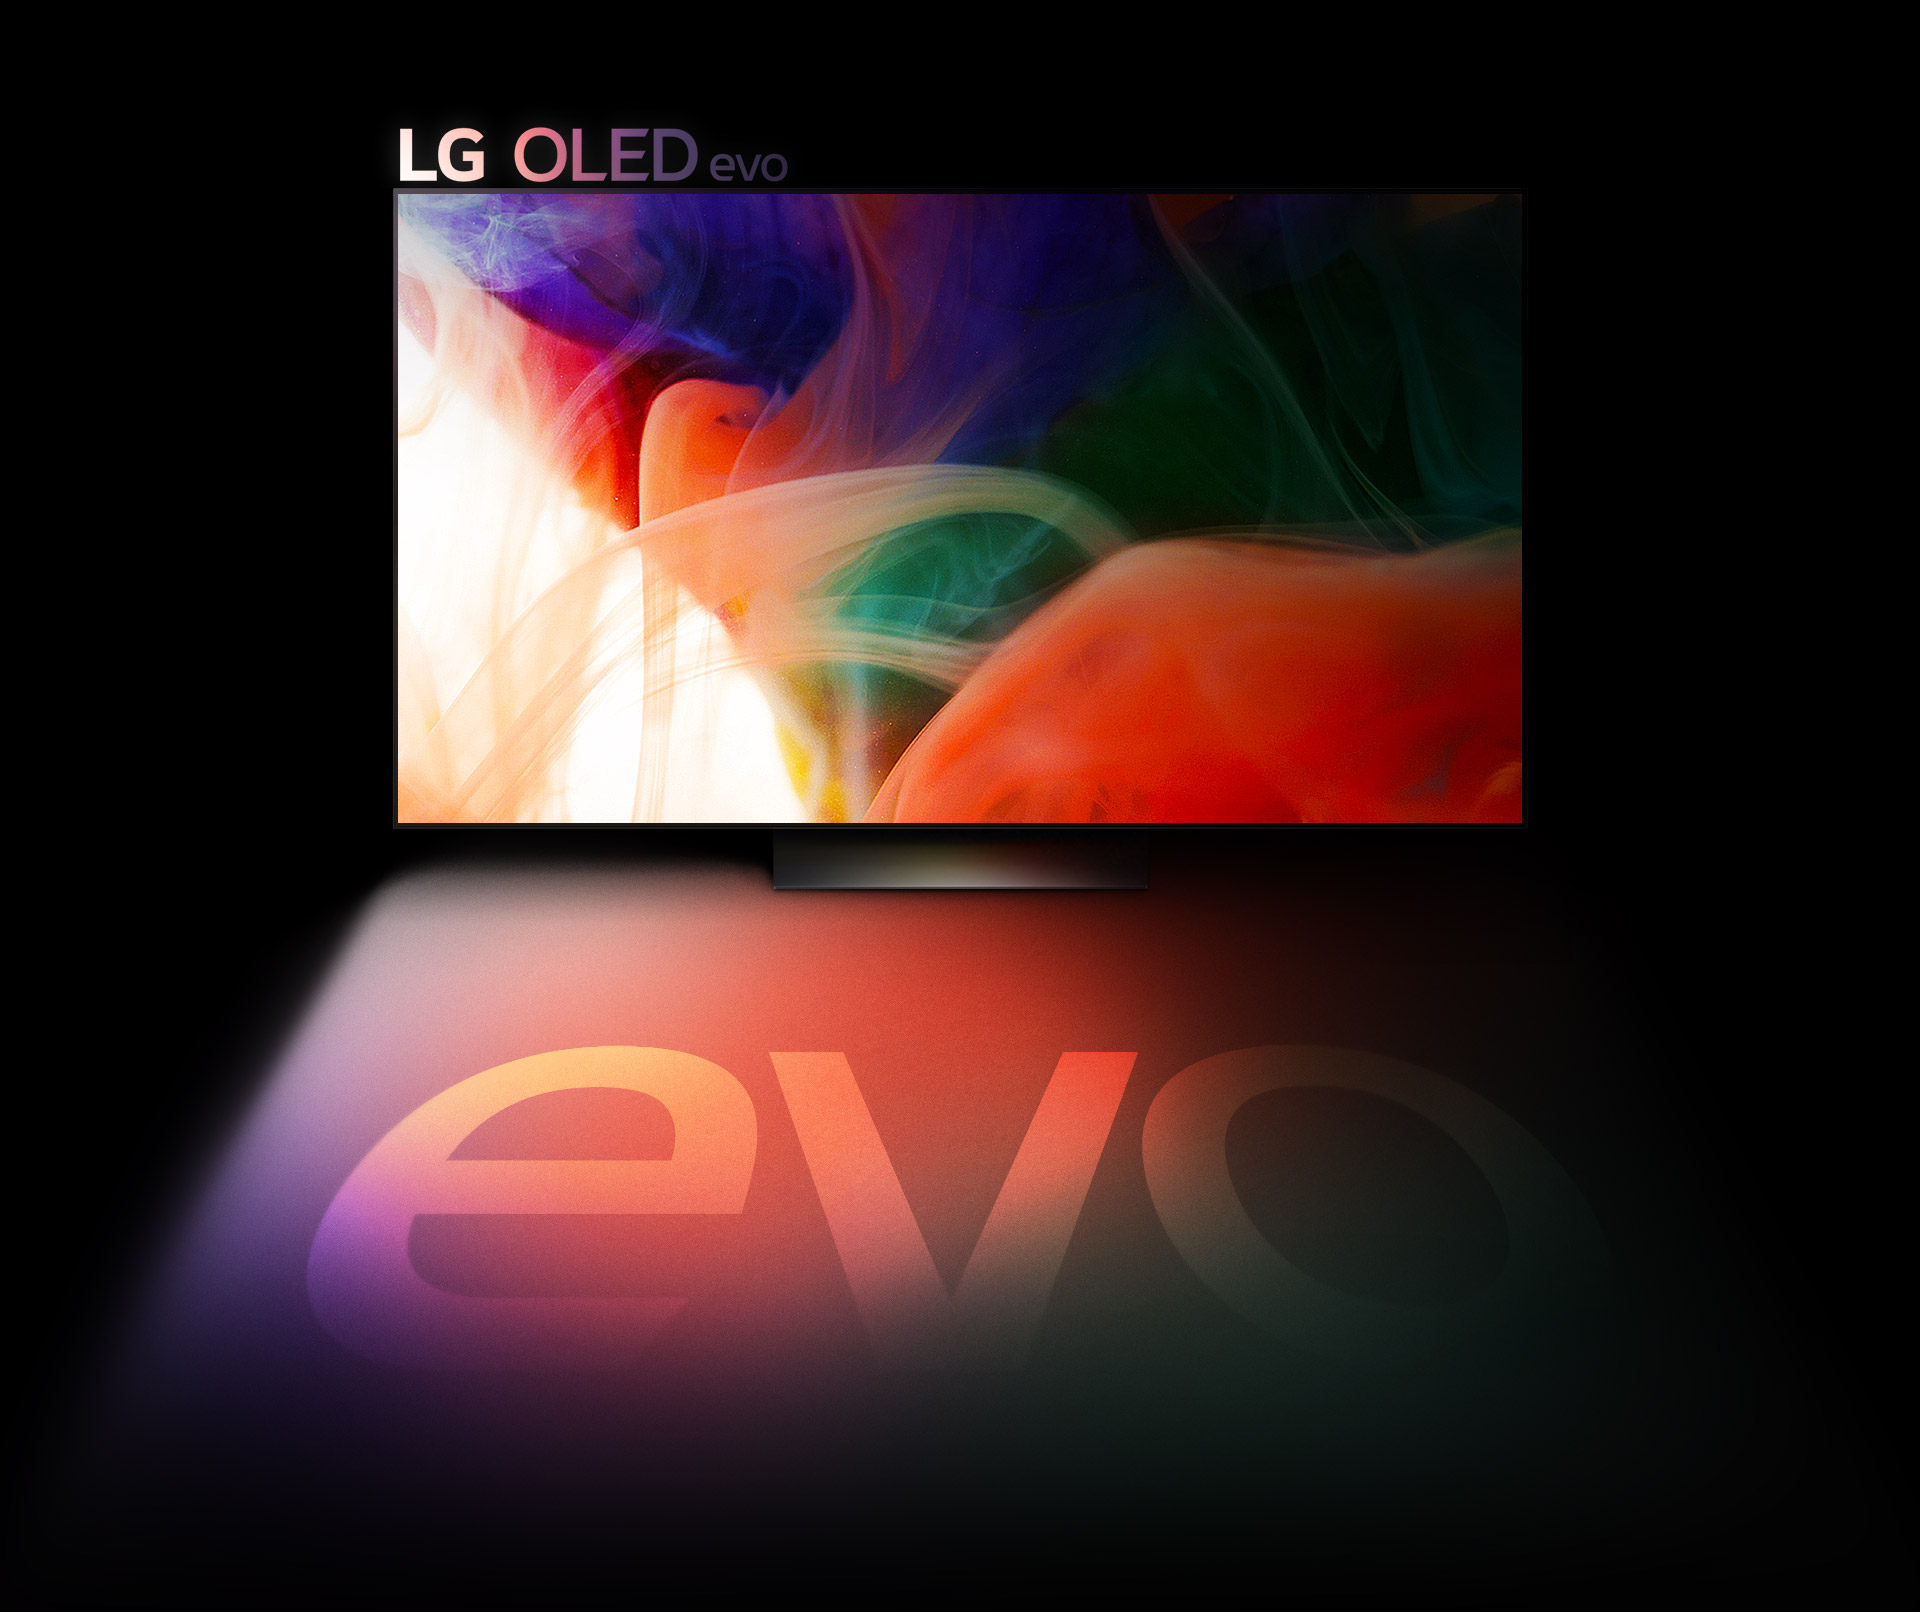 Красочное абстрактное изображение на экране OLED-телевизора LG evo